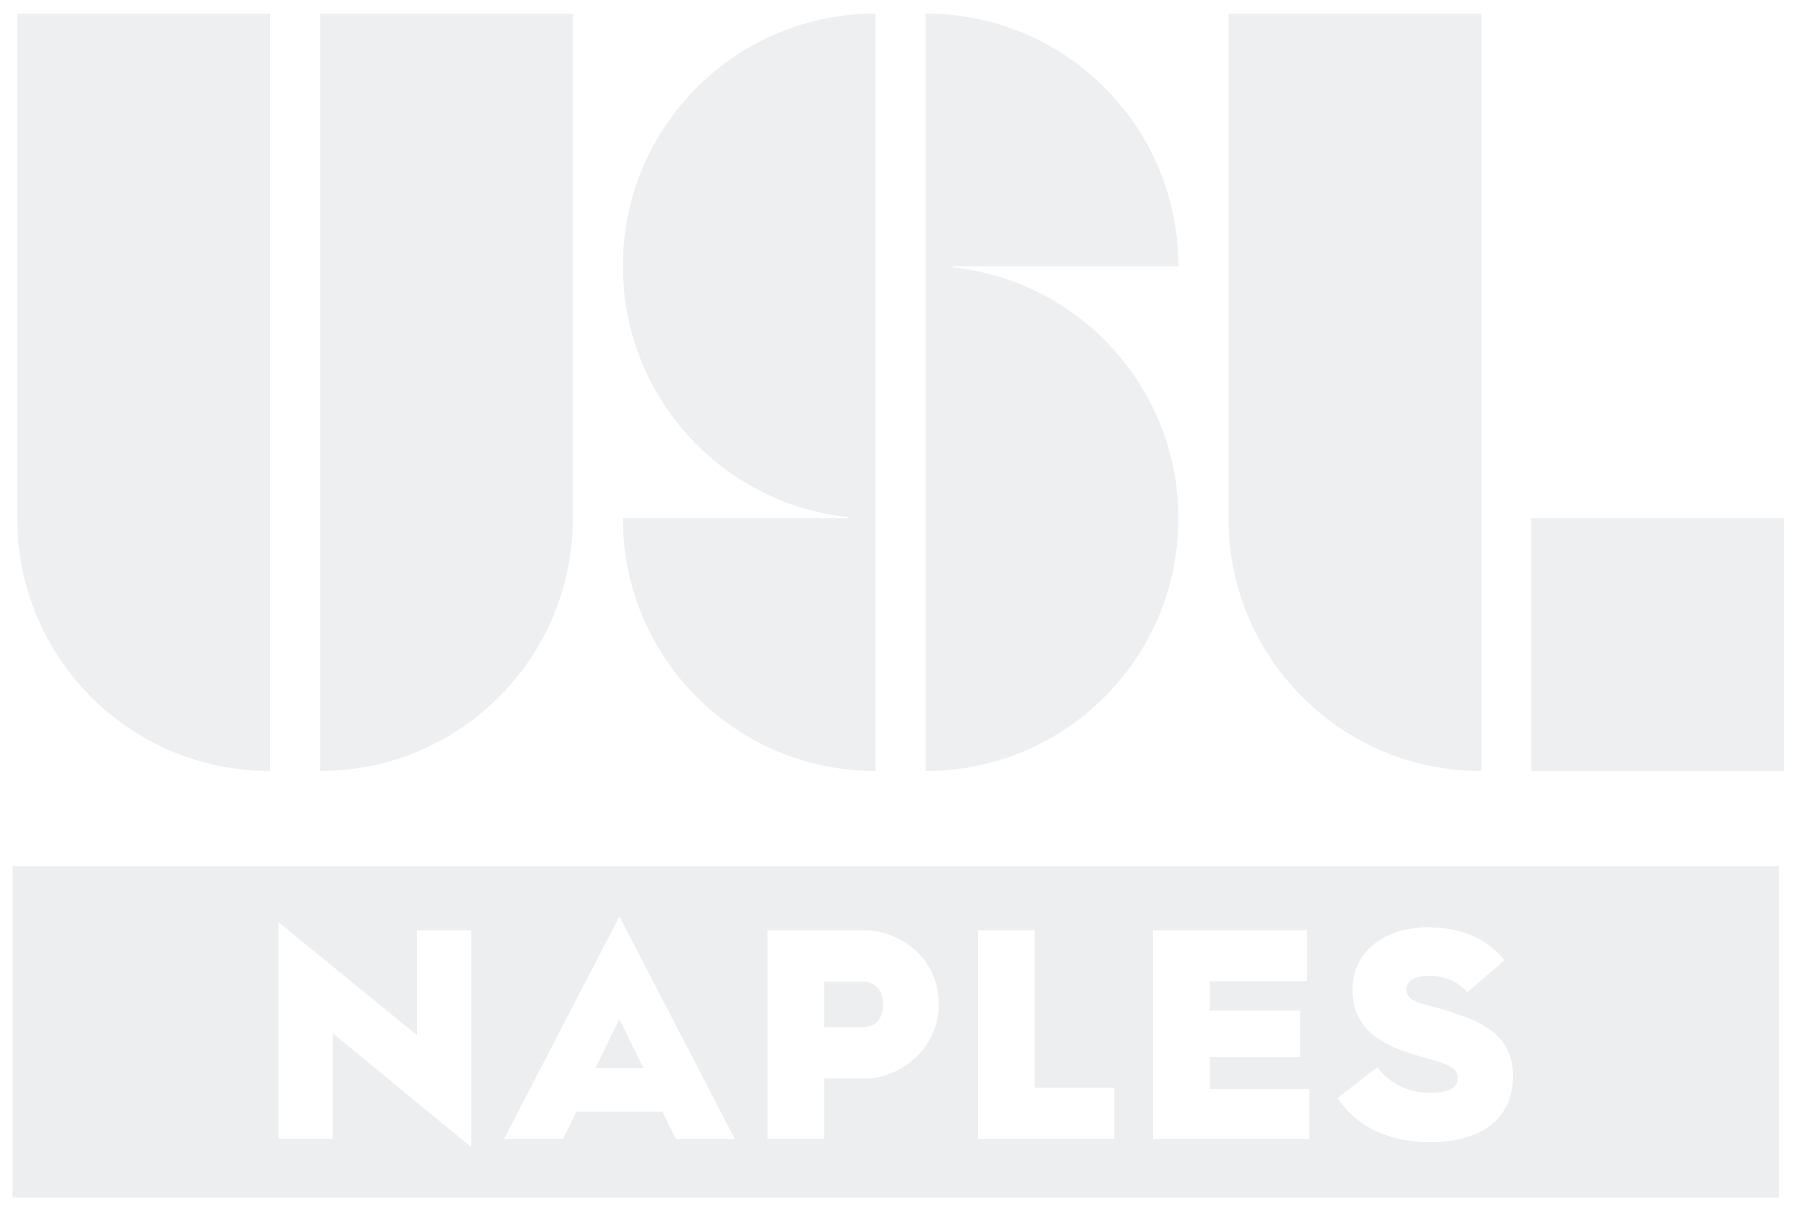 USL Naples